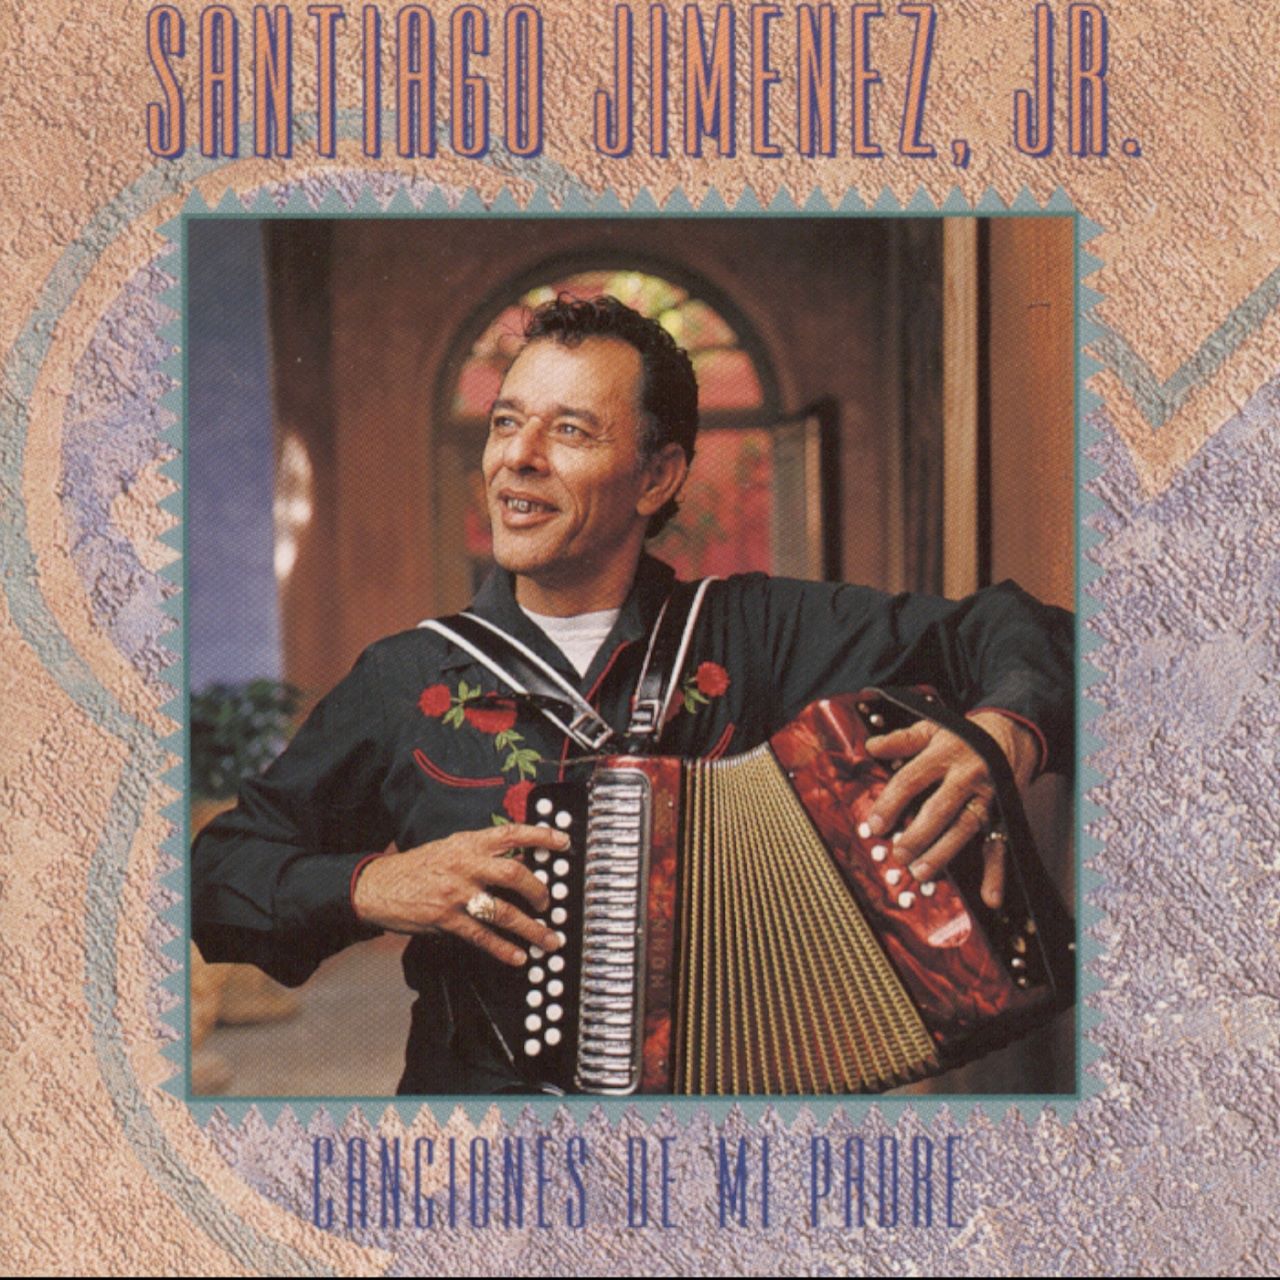 Santiago Jimenez Jr. - Canciones De Mi Padre cover album